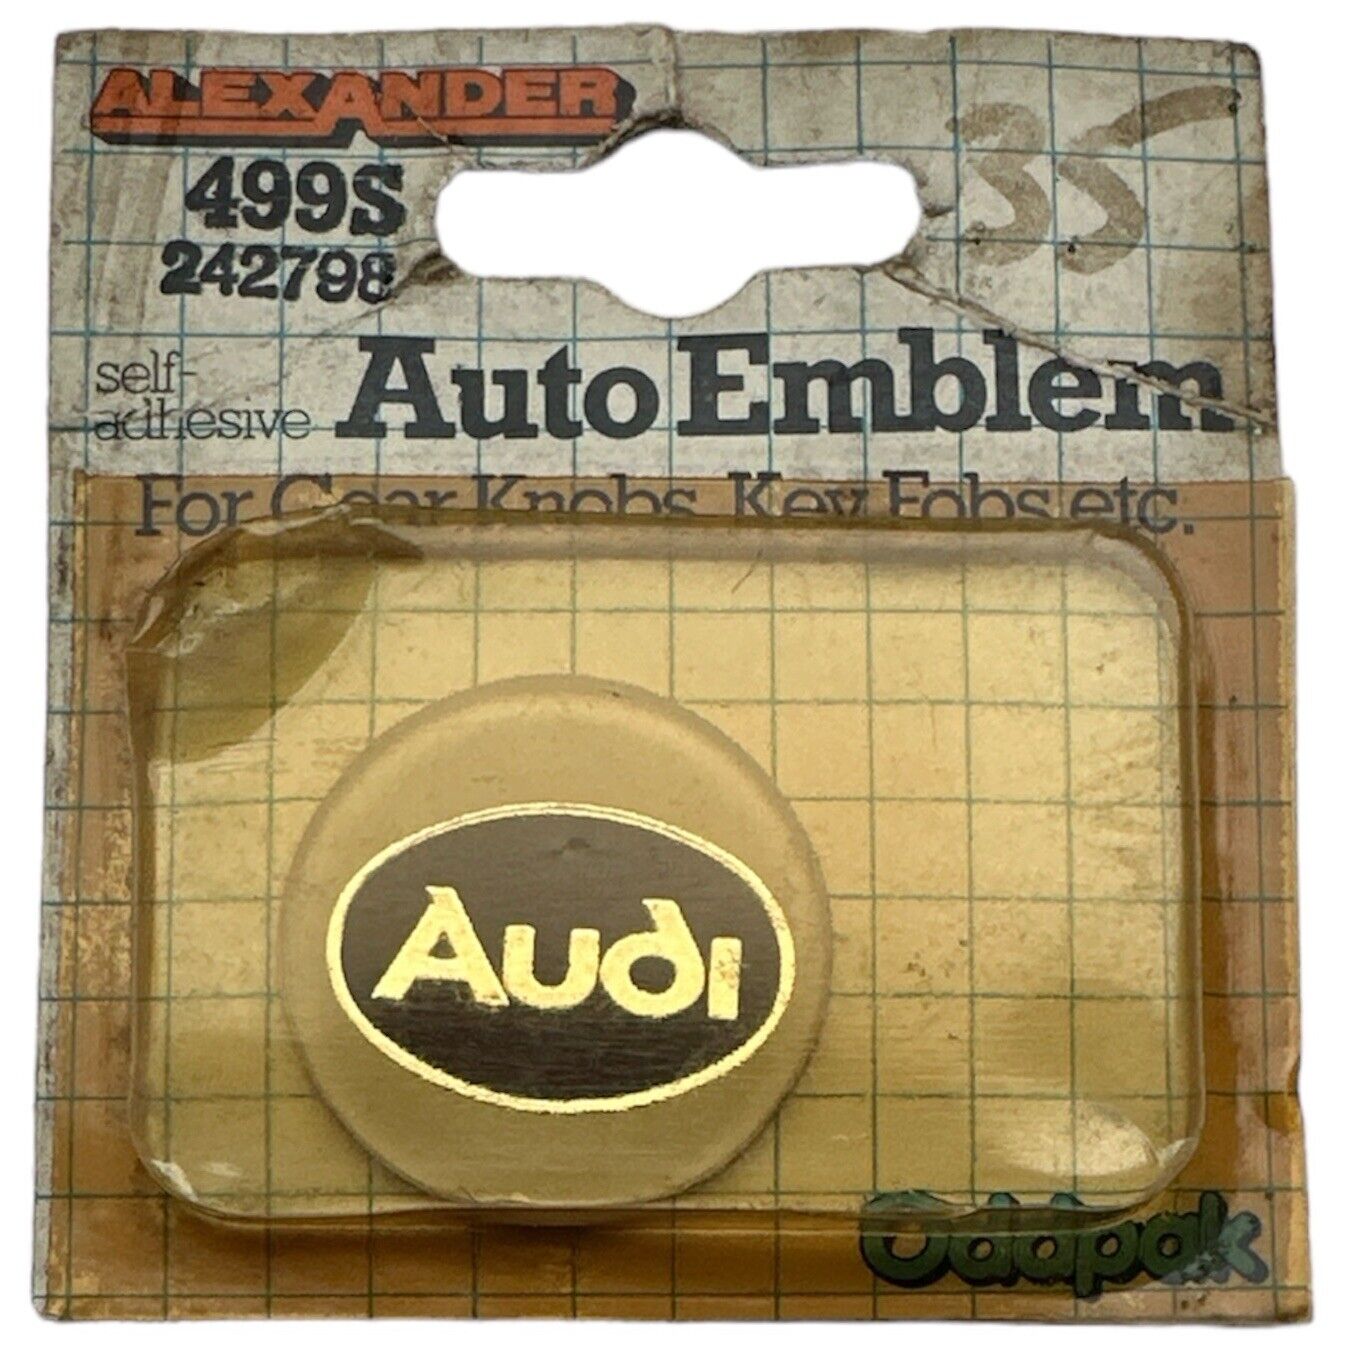 Vintage Audi Auto Emblem Car Badge, Gear Knob, Key Fob, Alexander, Sealed Packet